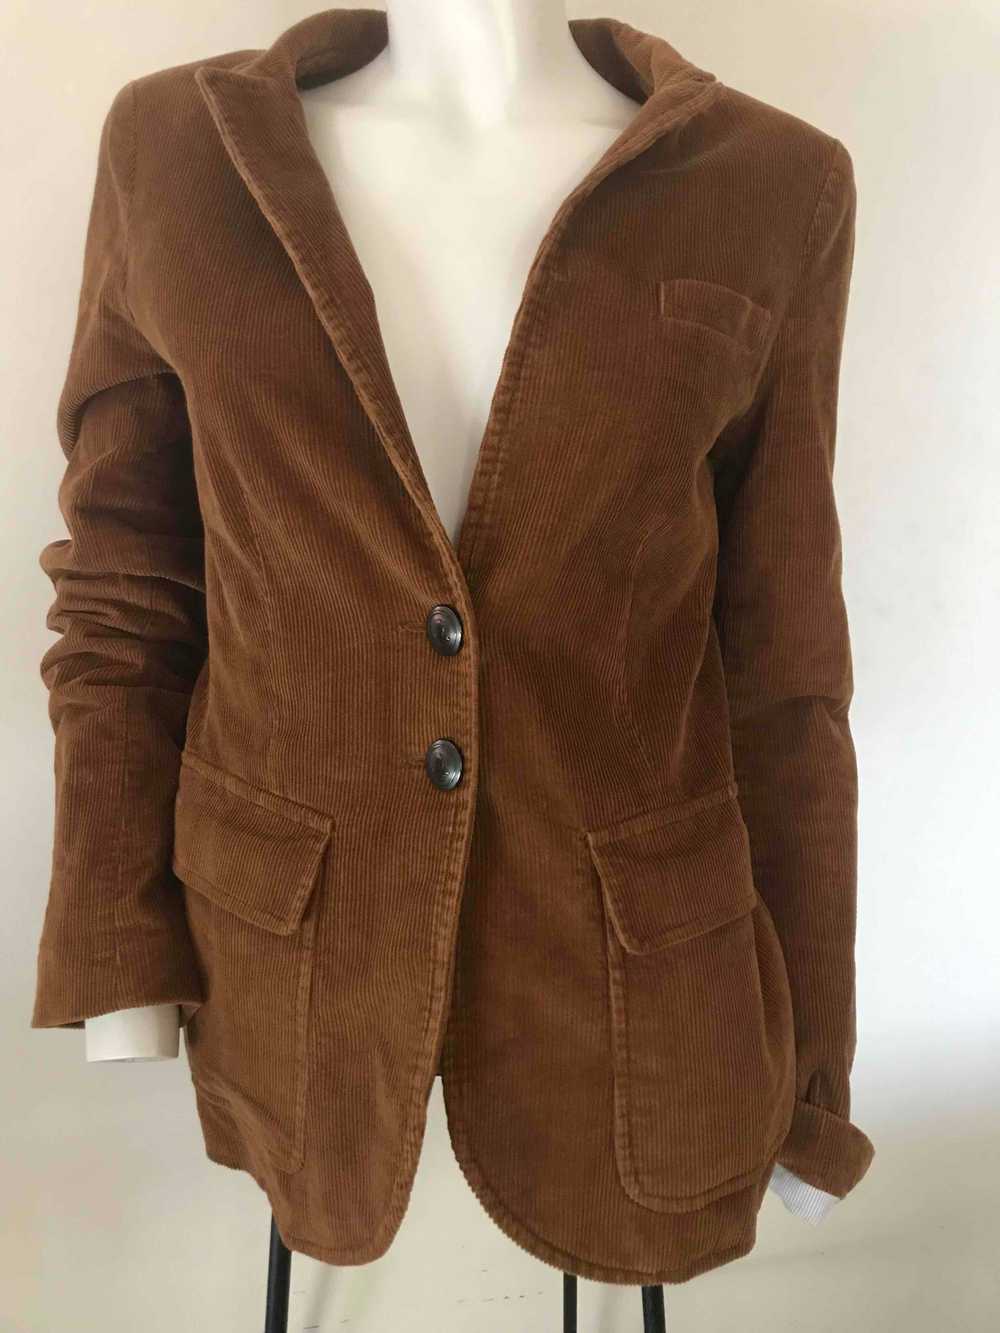 Corduroy blazer - Camel corduroy jacket - image 3